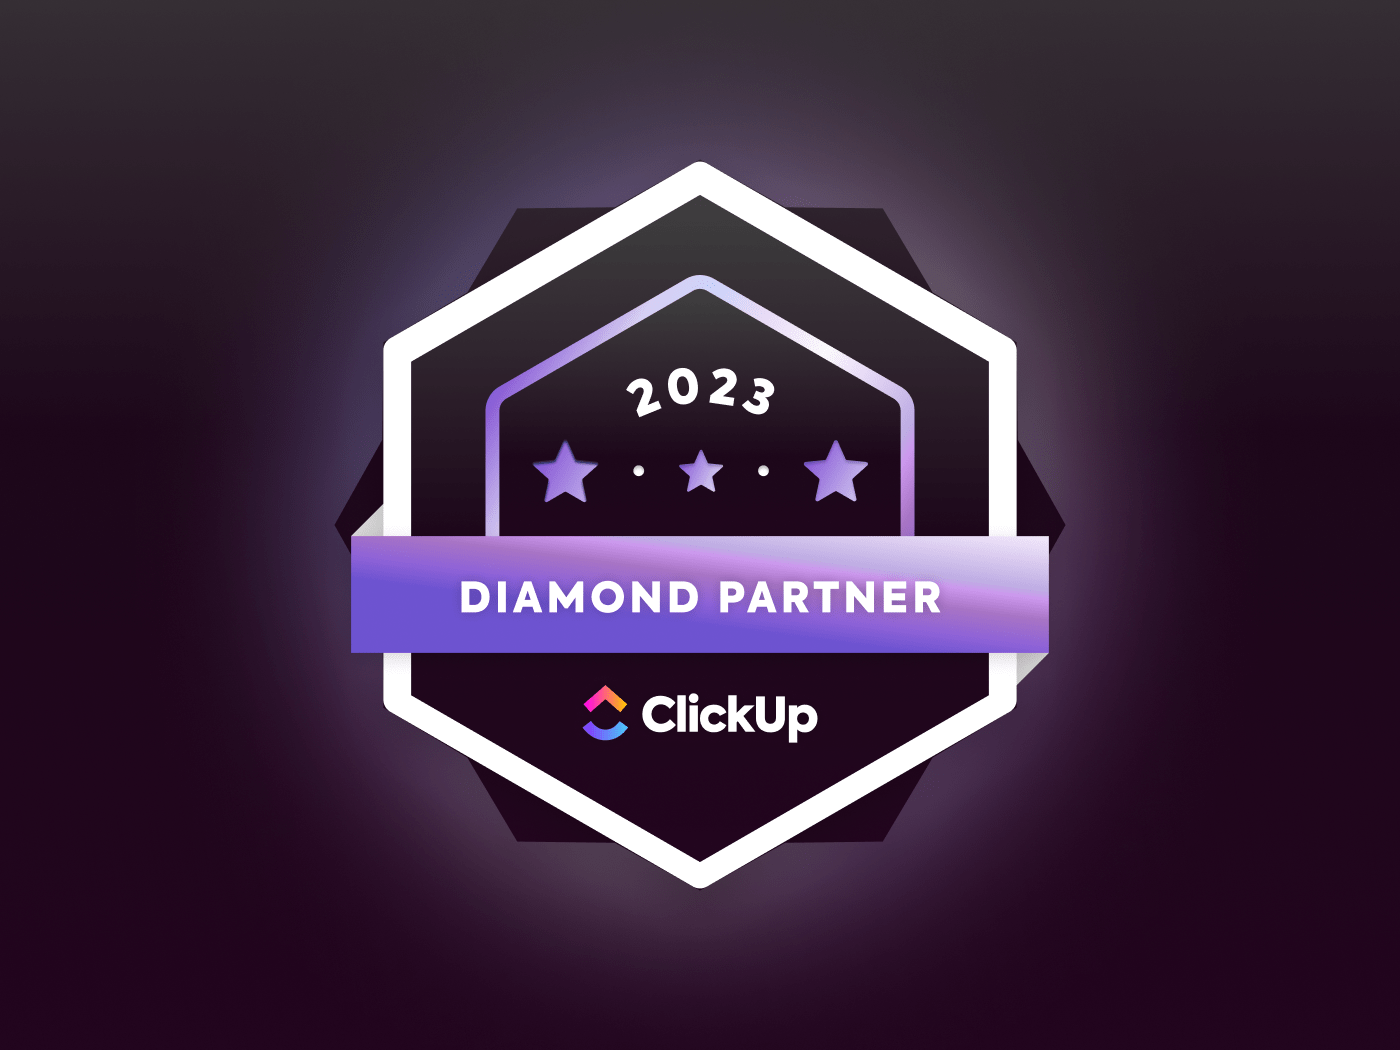 ClickUp Diamond Partner Blog feature updated